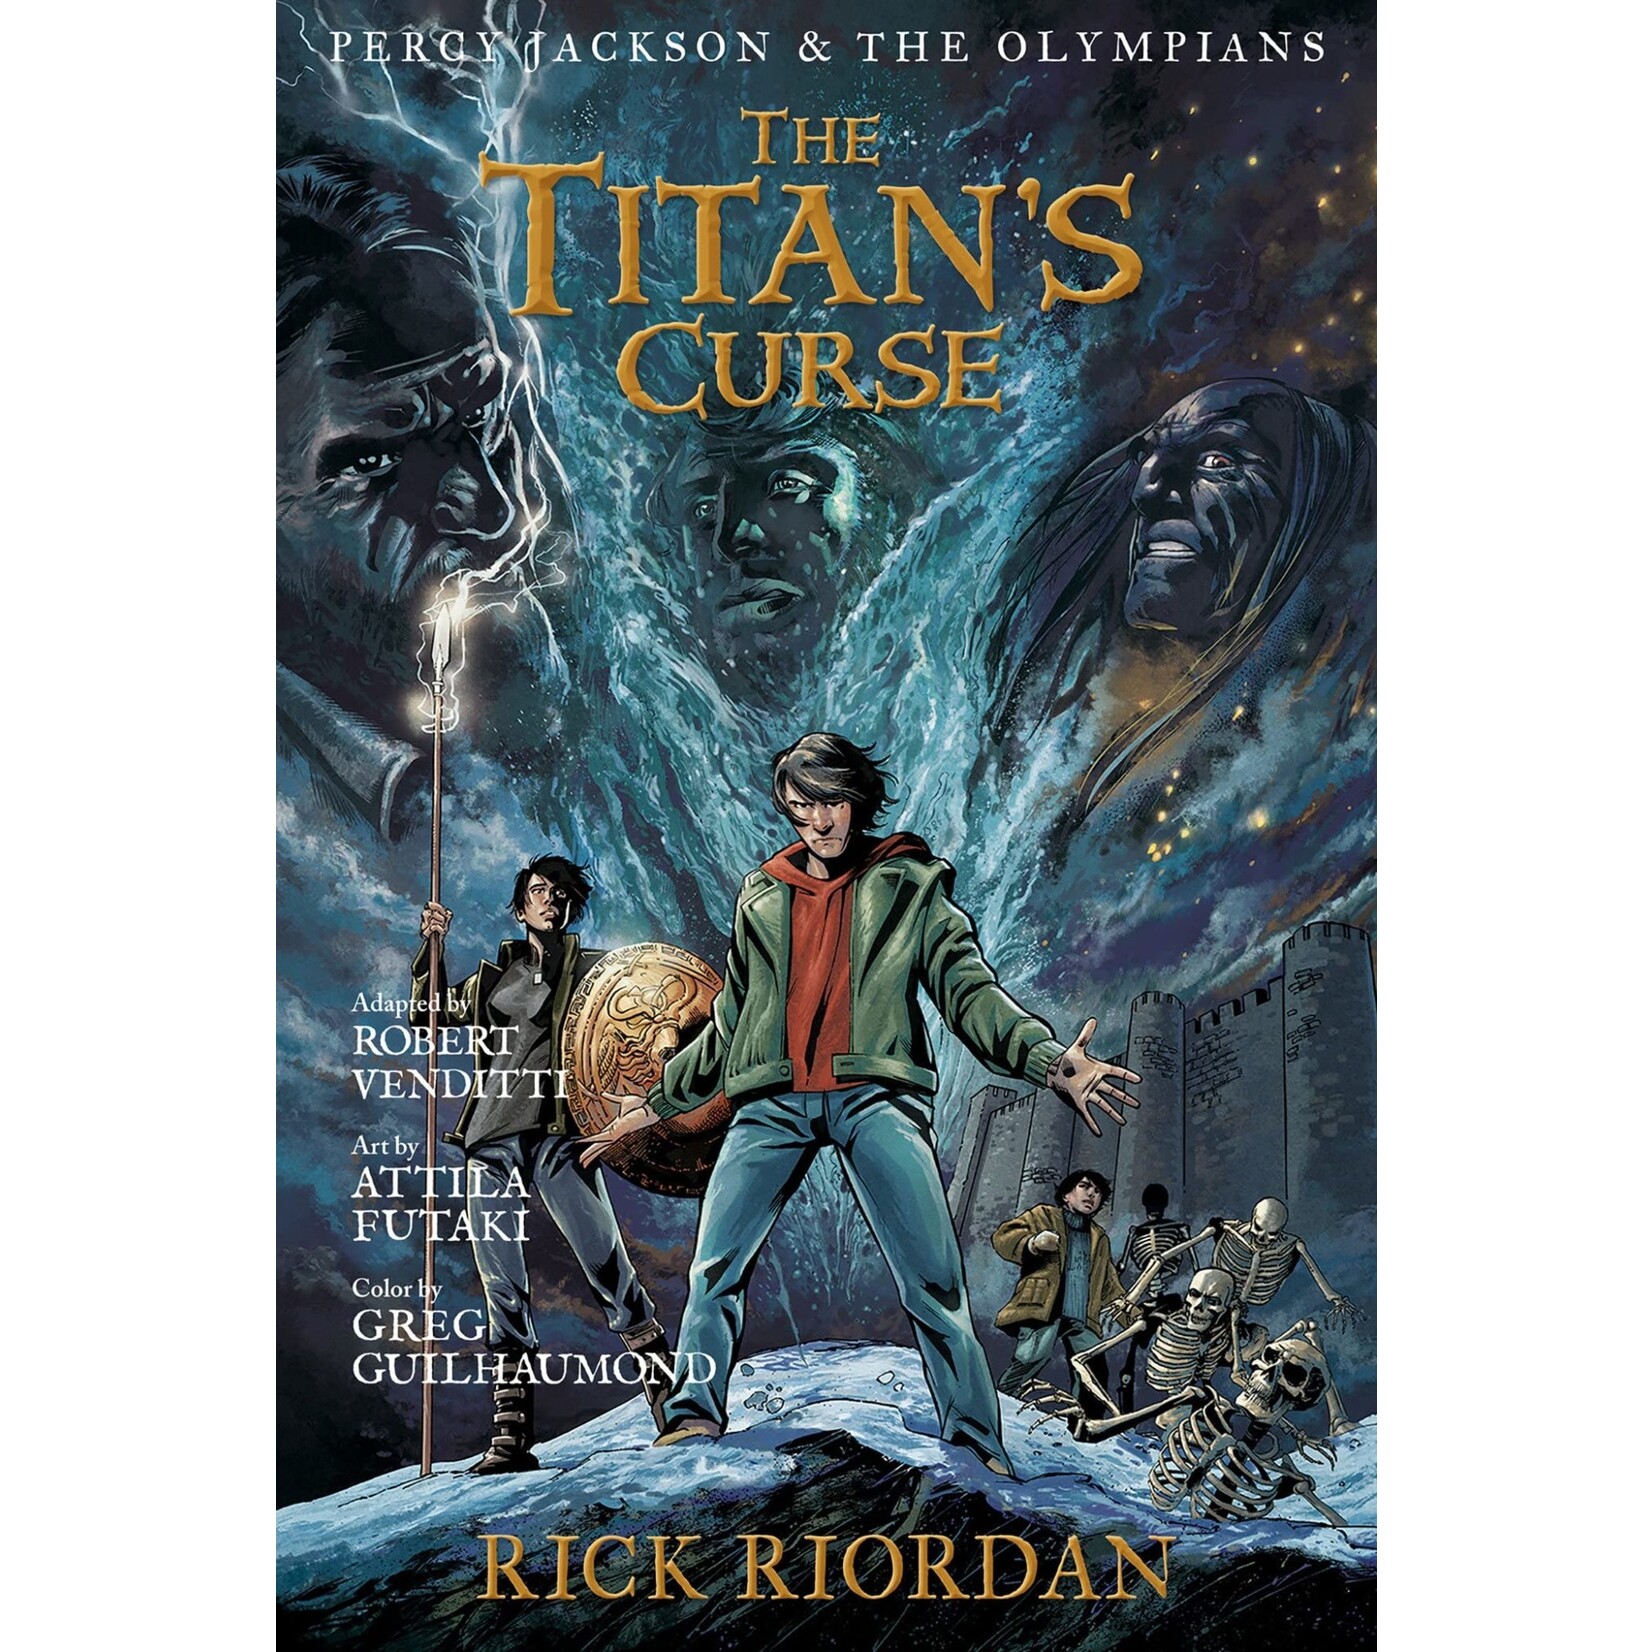 The Titan's Curse: The Graphic Novel (Percy Jackson #3)